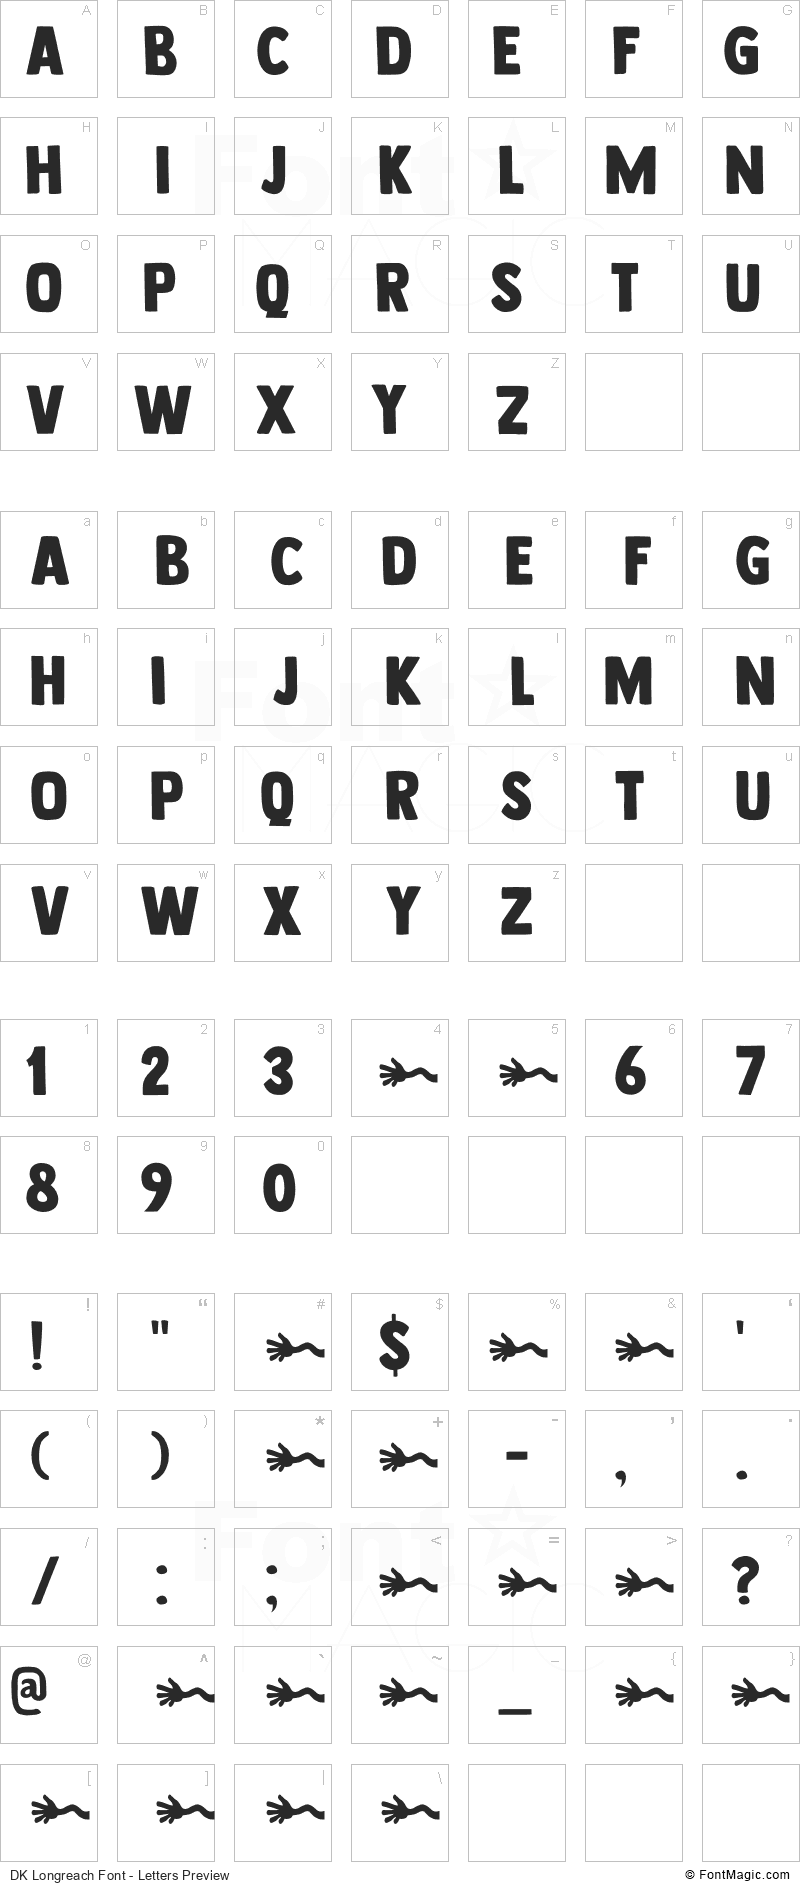 DK Longreach Font - All Latters Preview Chart